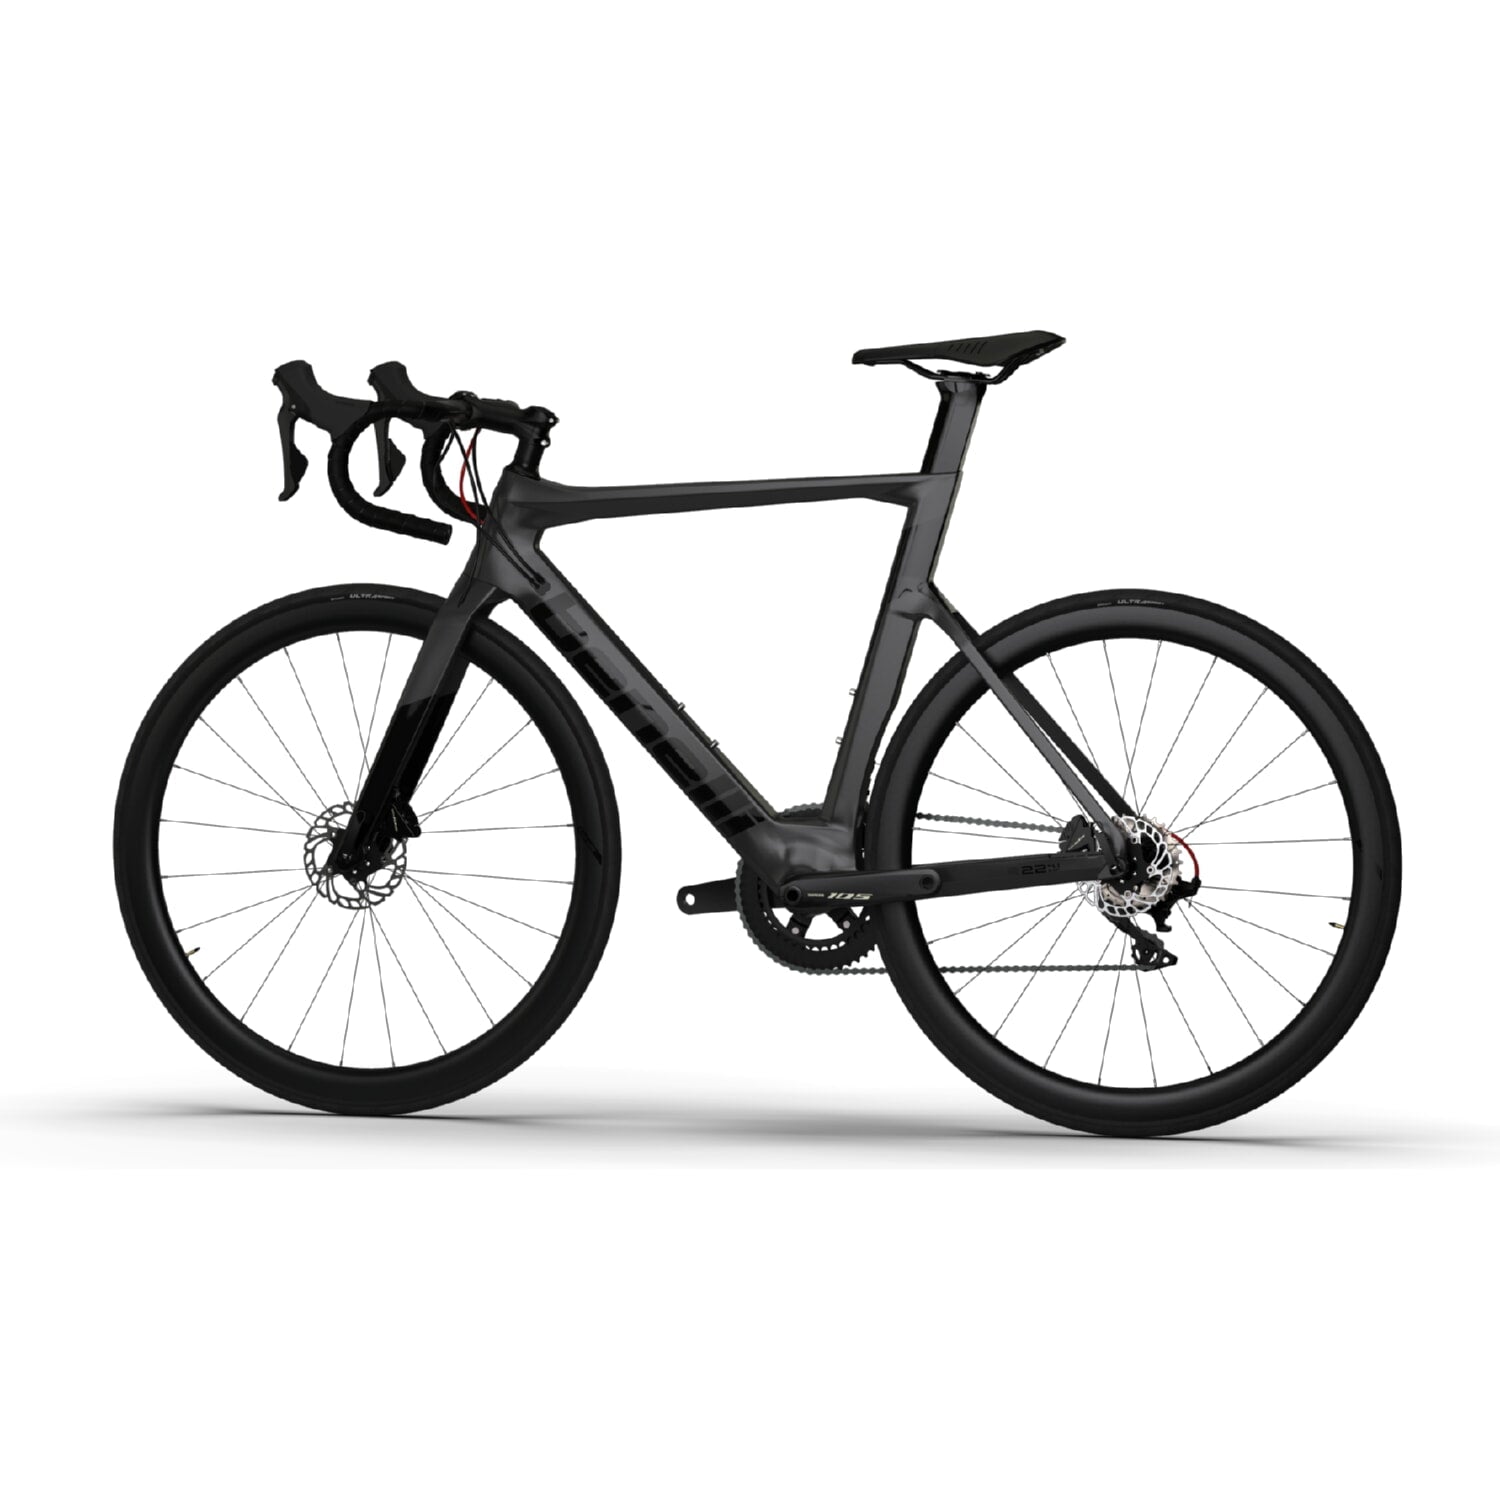 Bicicleta Ruta Benelli Carb. (R22 4.1 Exp Carb Disk) Gris oscuro/Negro Talla M